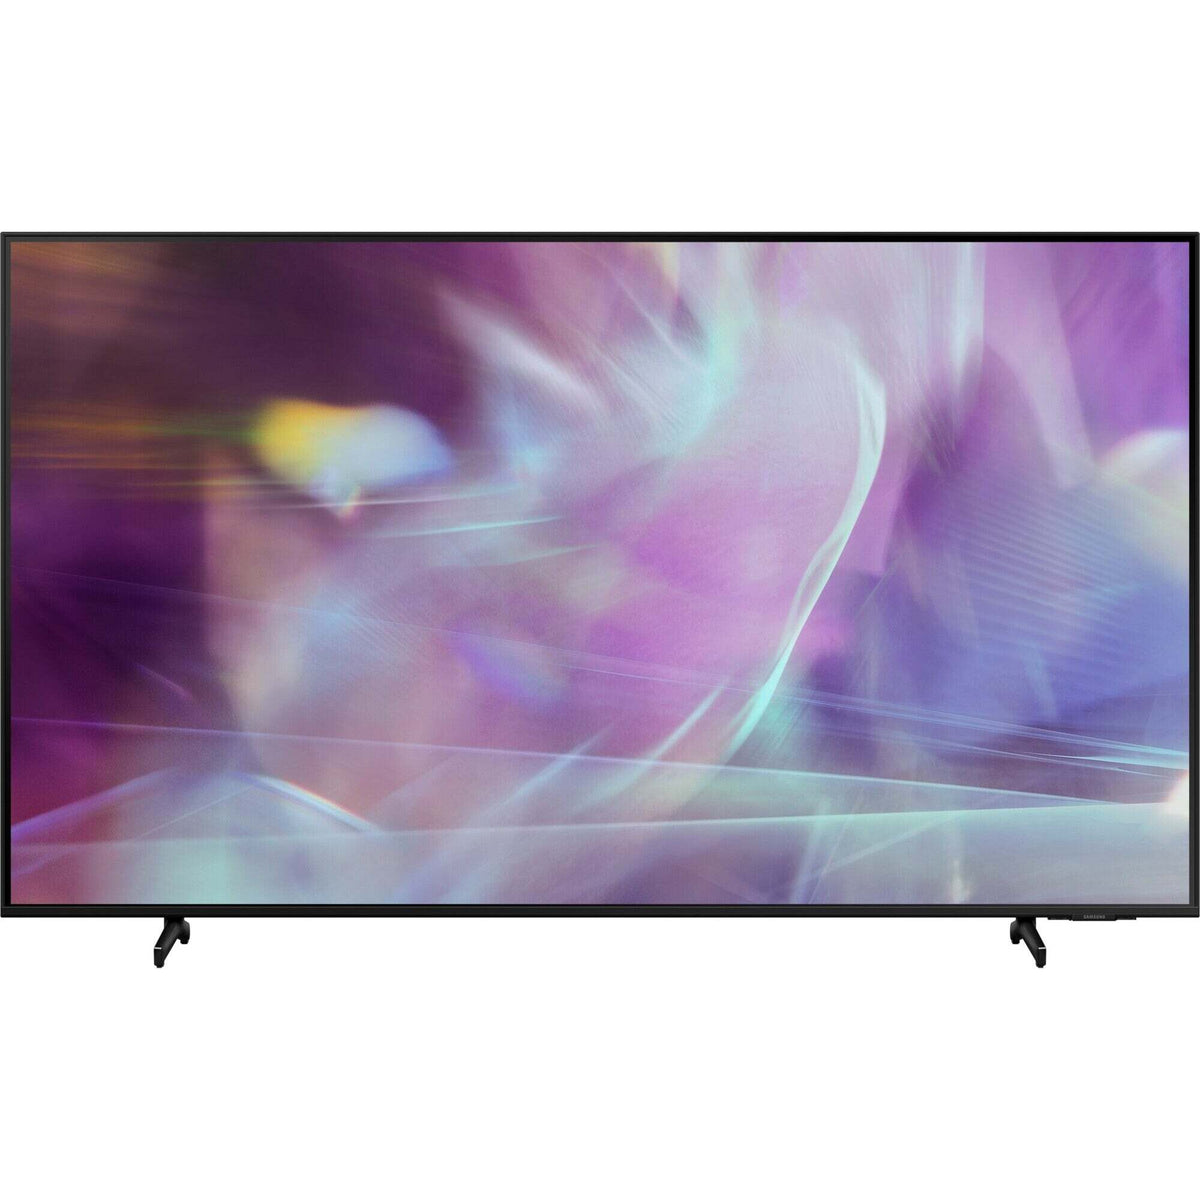 Televize Samsung QE55Q60A (2021) / 55" (139 cm) ROZBALENO